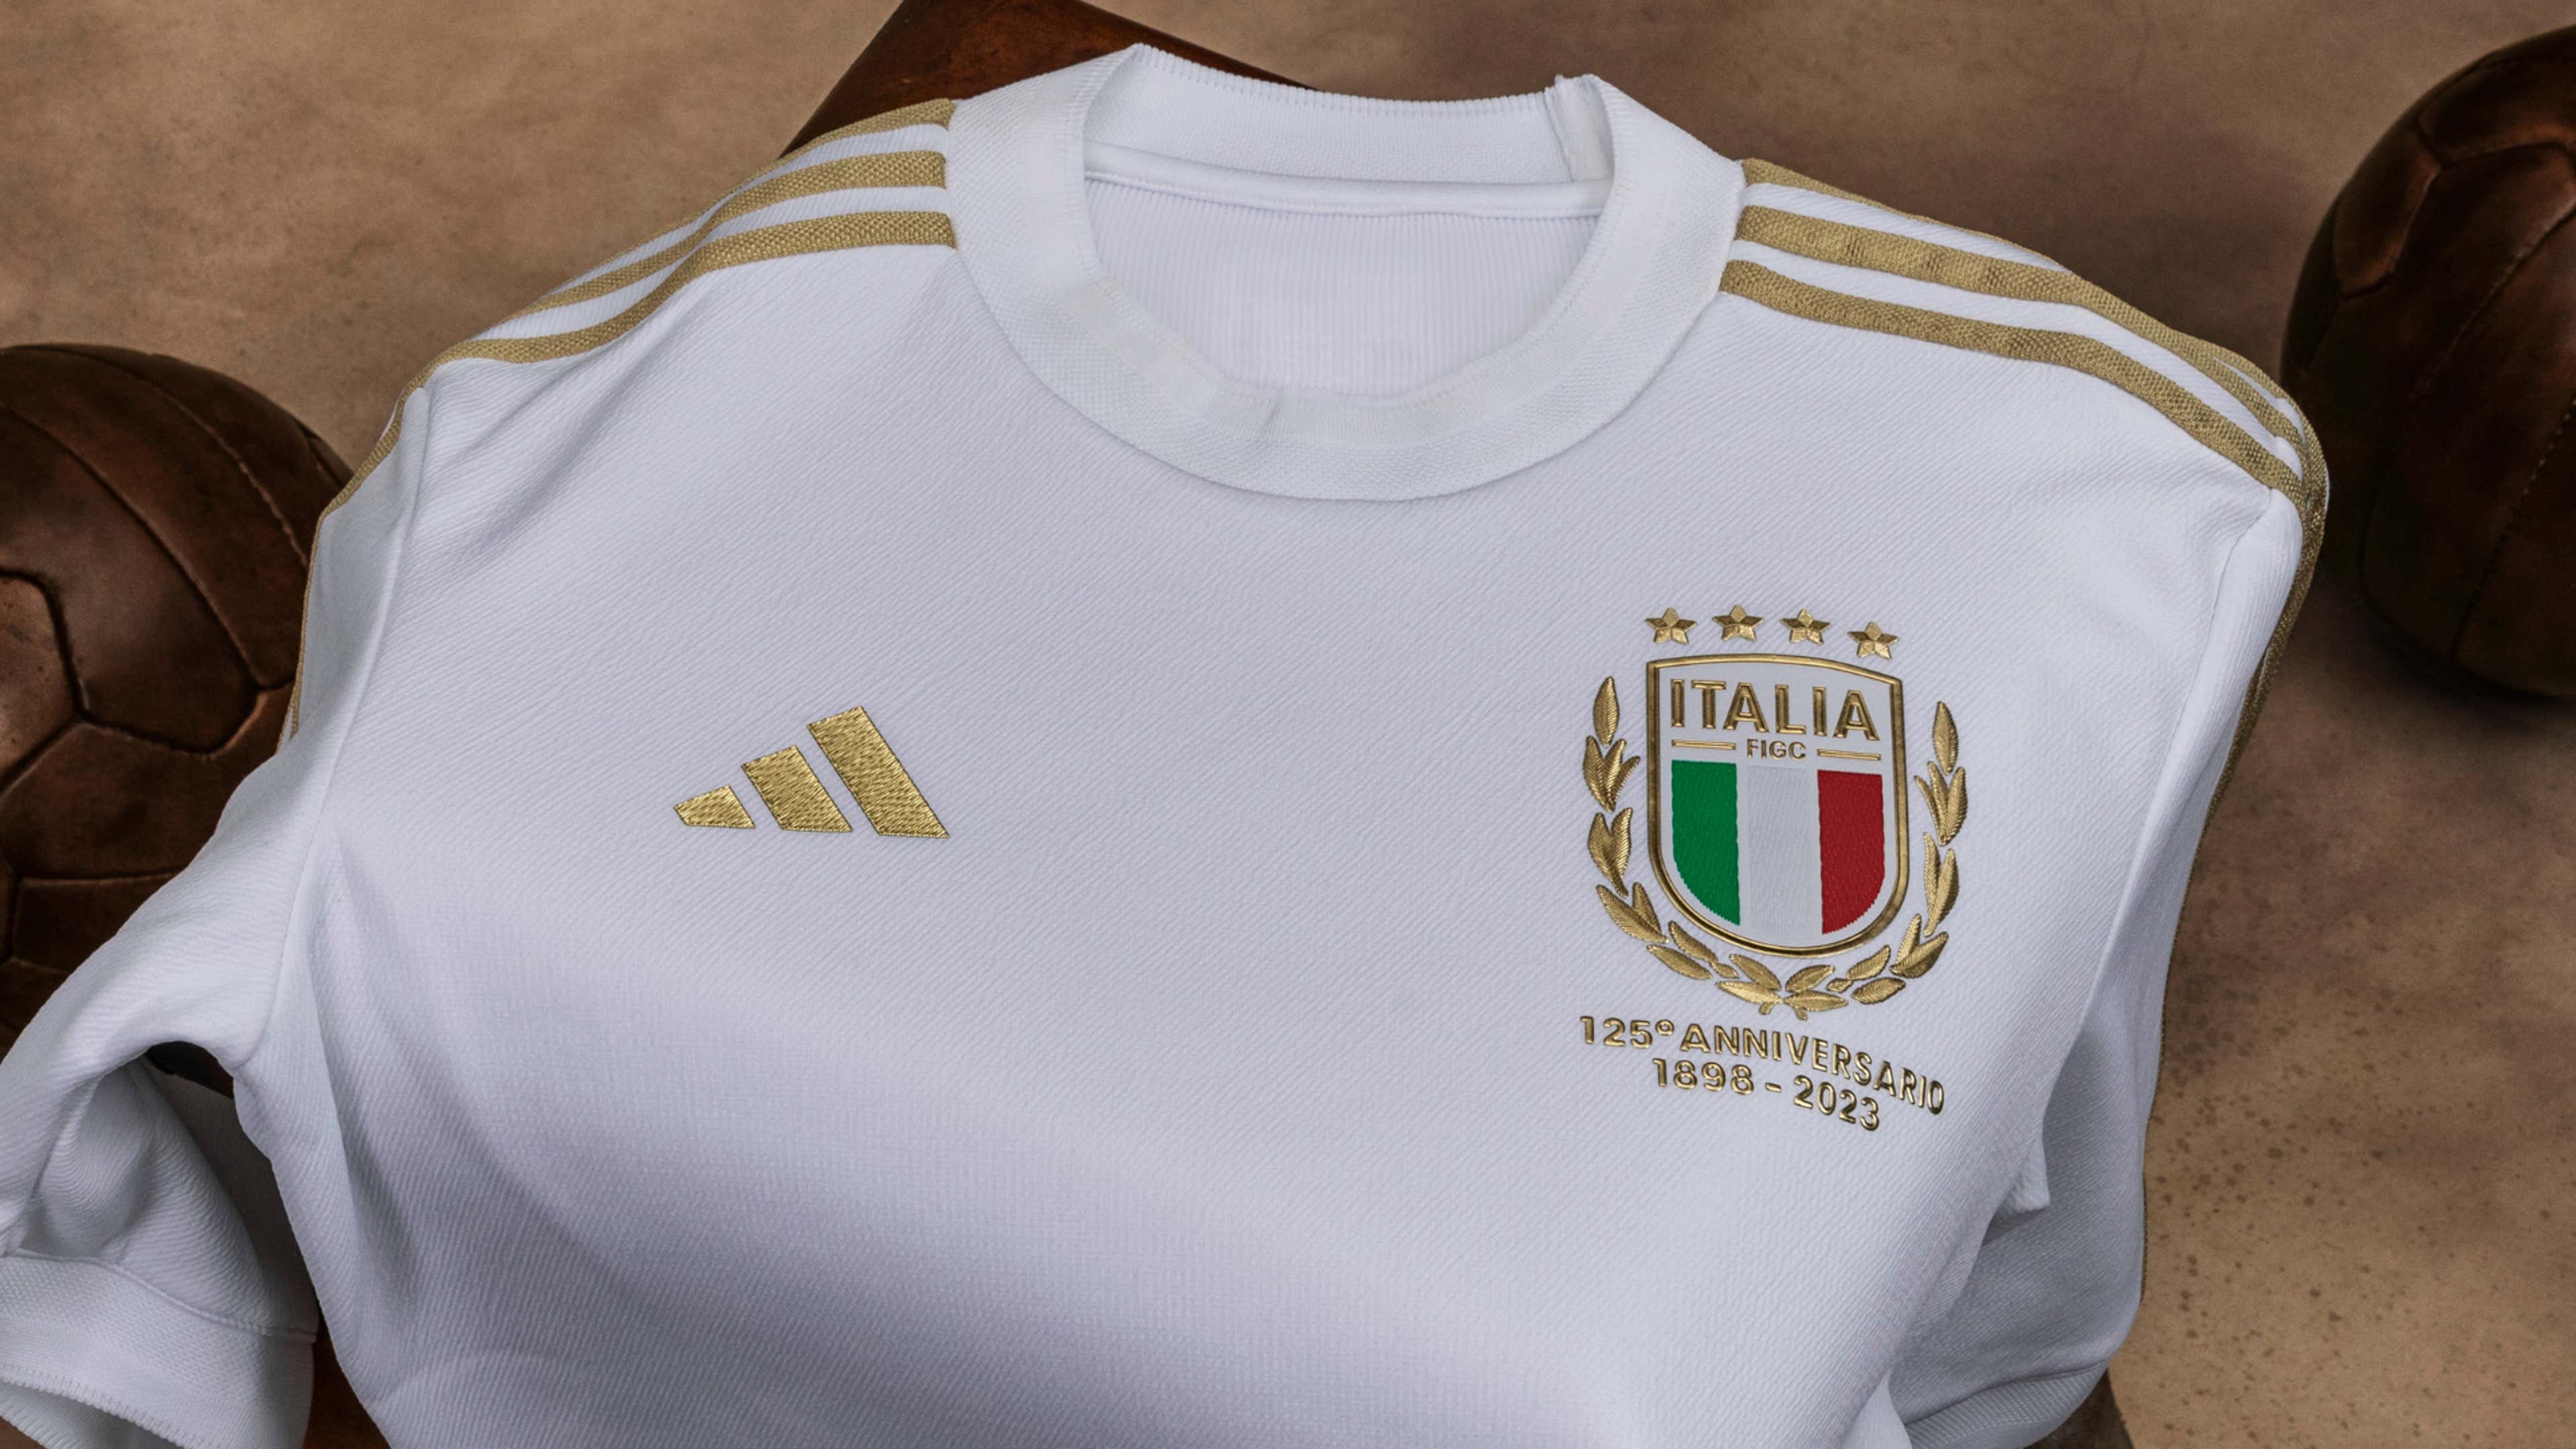 Italy 125th Anniversary Adidas Kit Unveiled » The Kitman